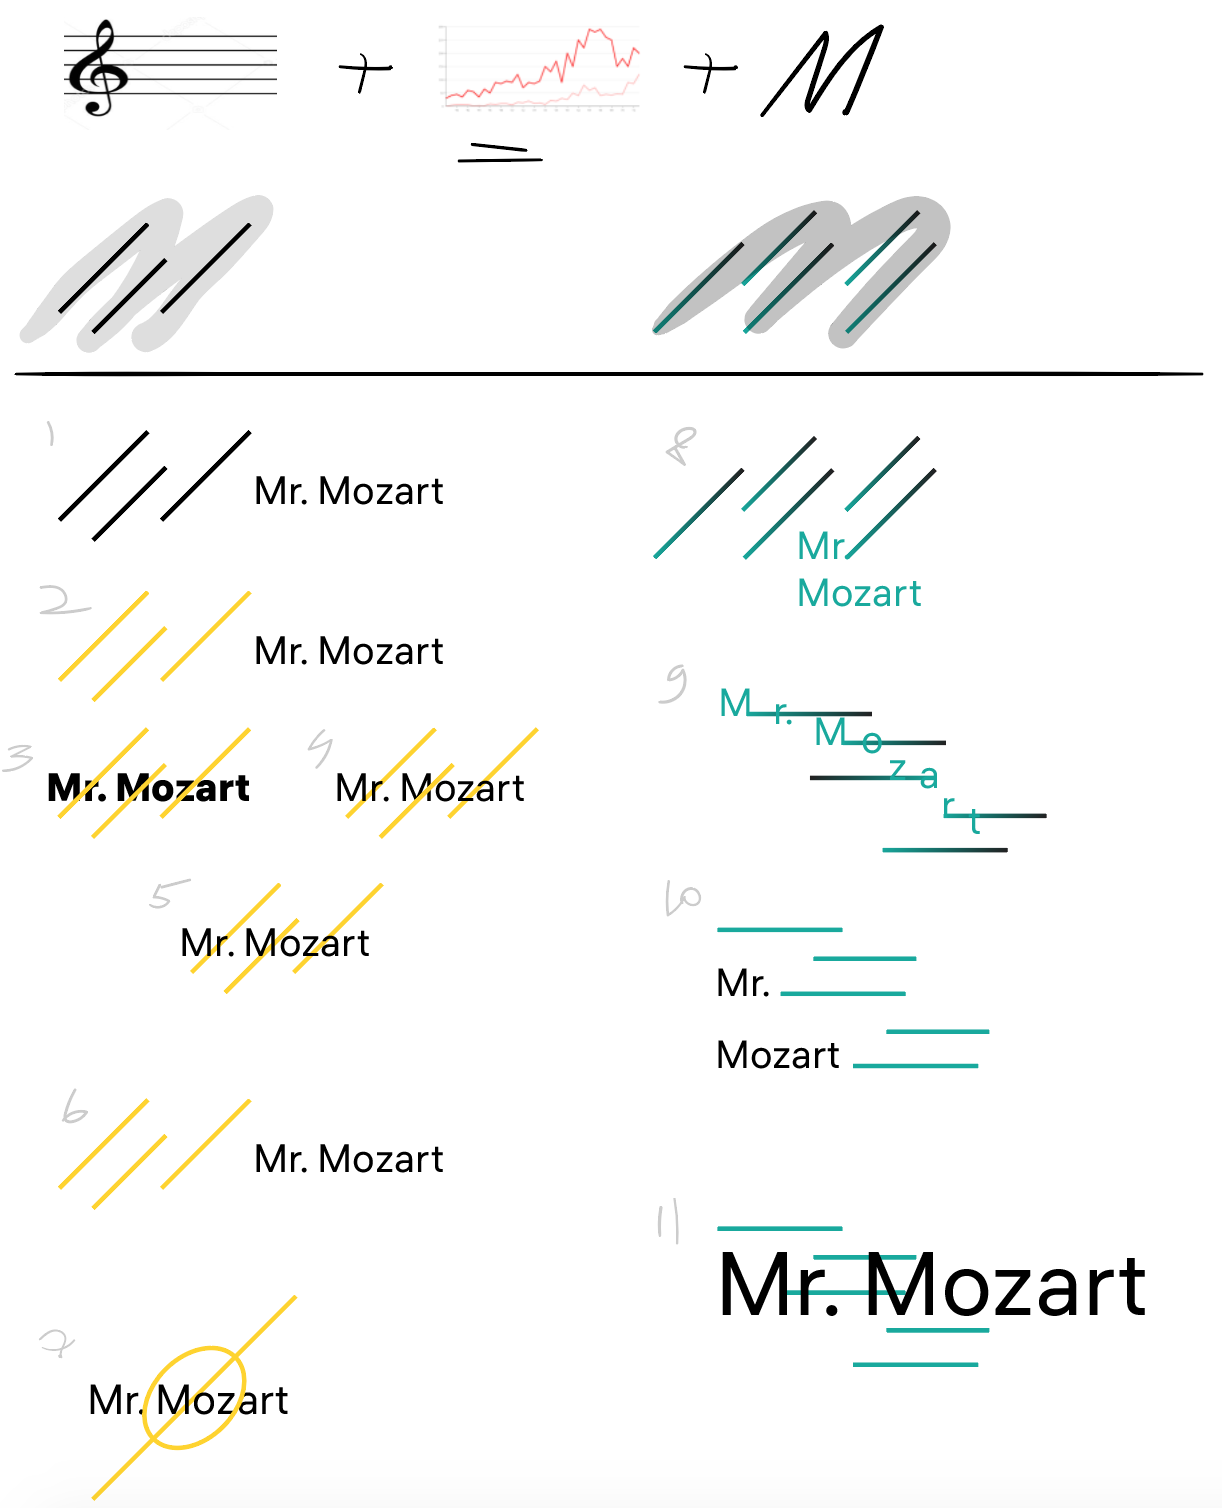 Mr mozart. Мистер Моцарт. Инвестор Mr Mozart. Mr Mozart трейдер кто это.